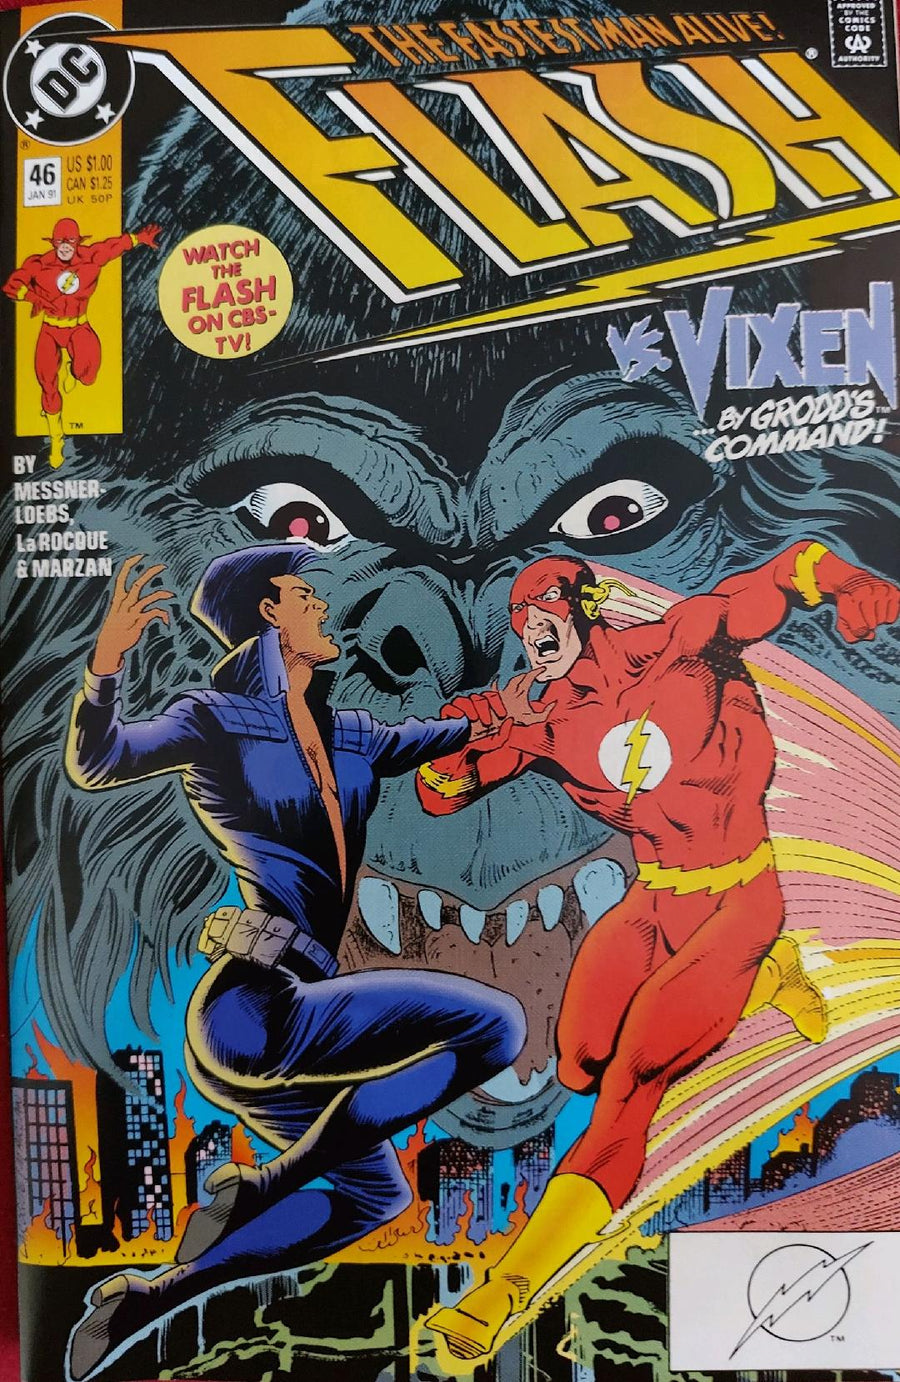 Flash #46 Vol 2 1991 Comic Book Cover